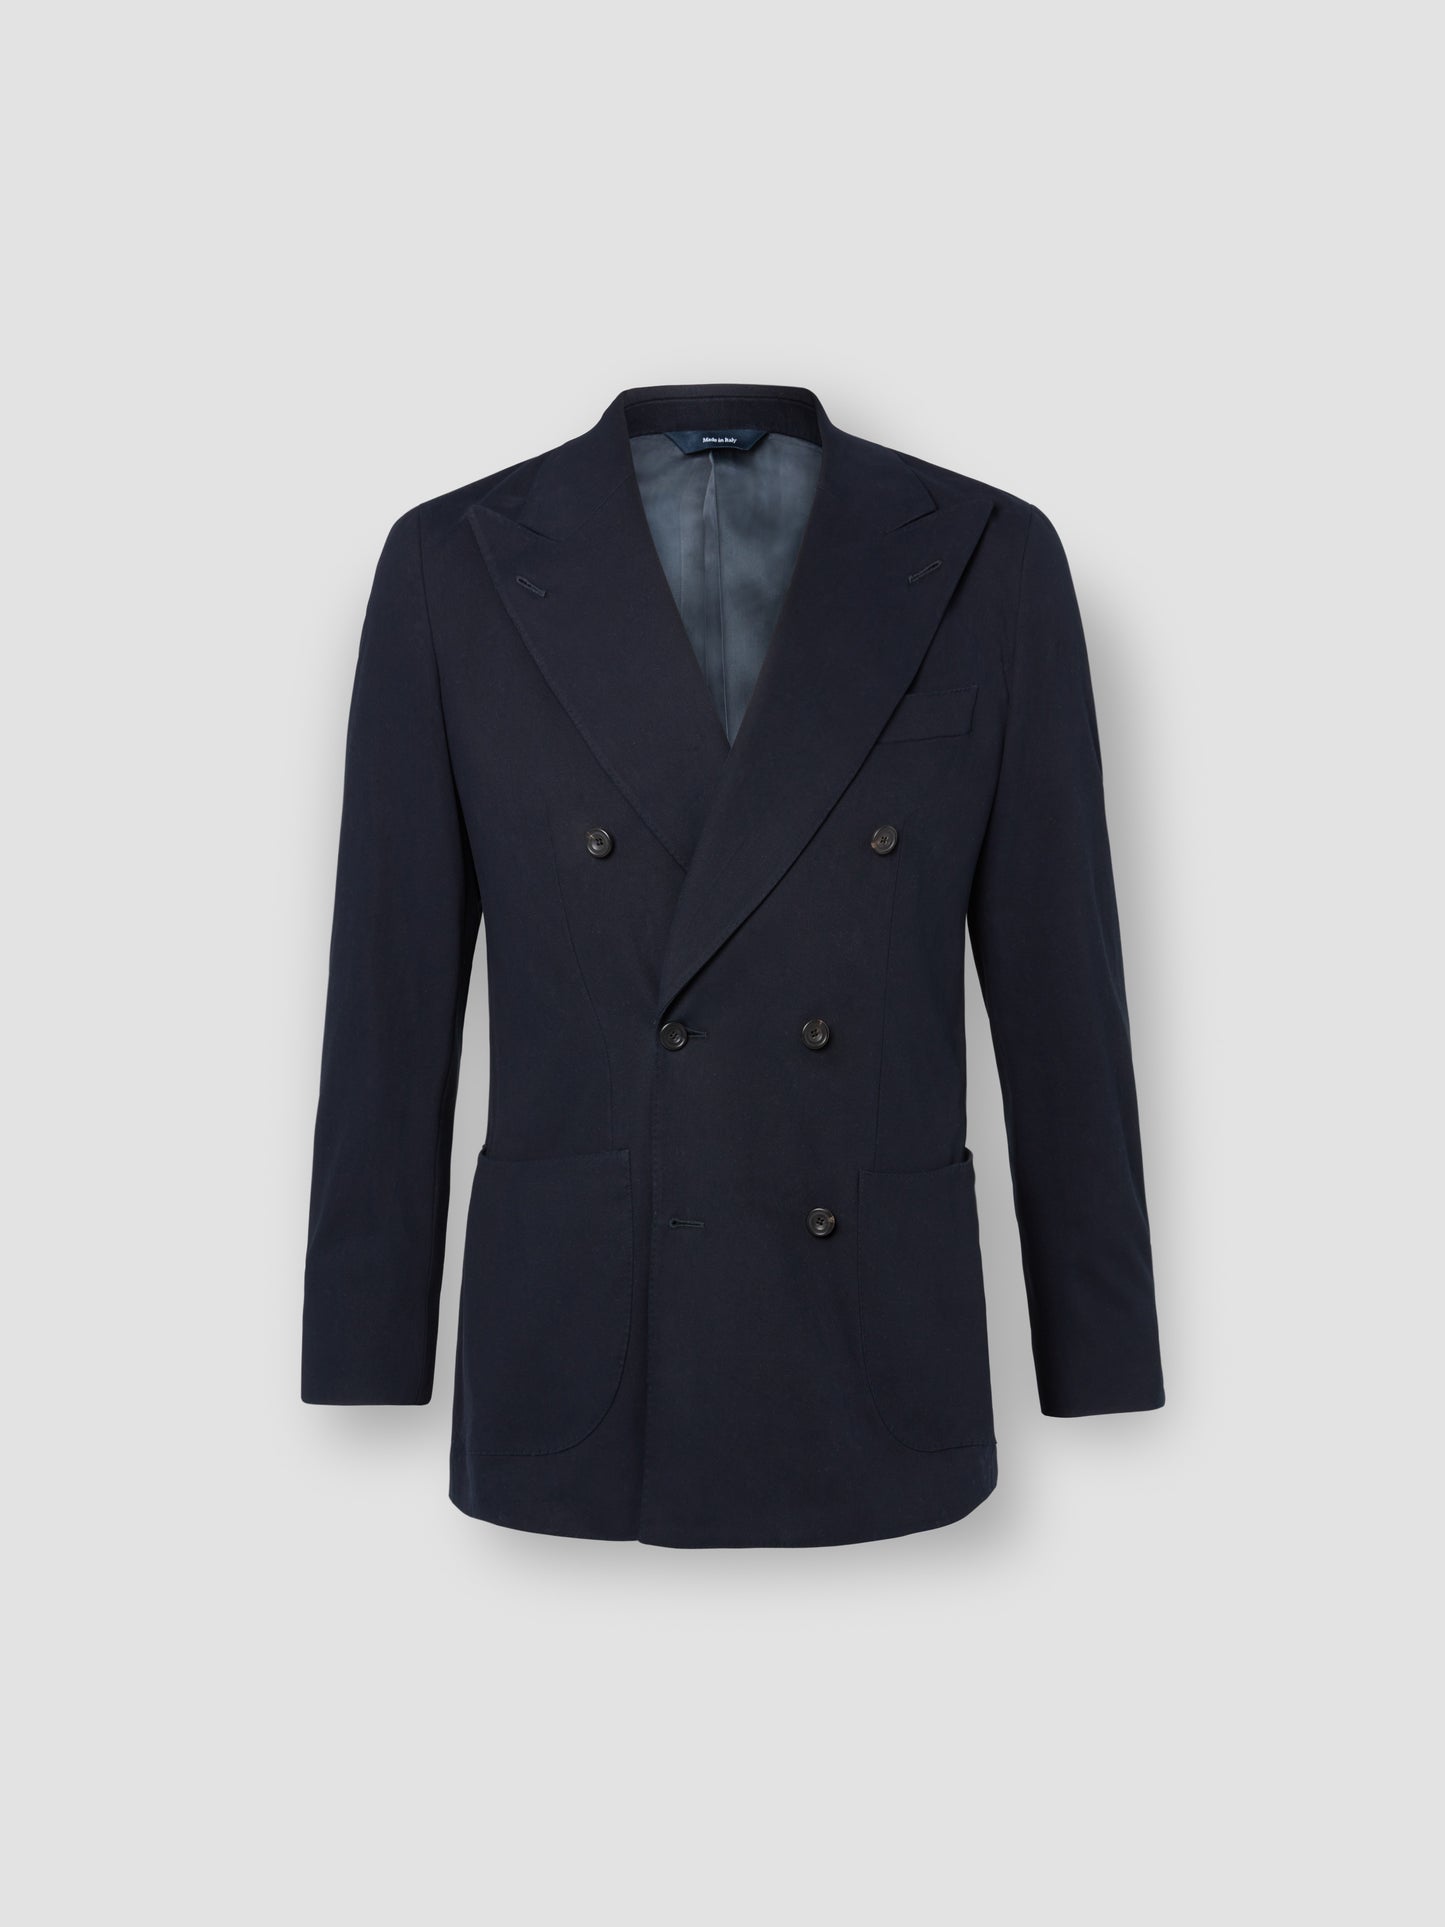 Brushed Cotton Double Breasted Peak Lapel Suit Navy Jacket Product Image